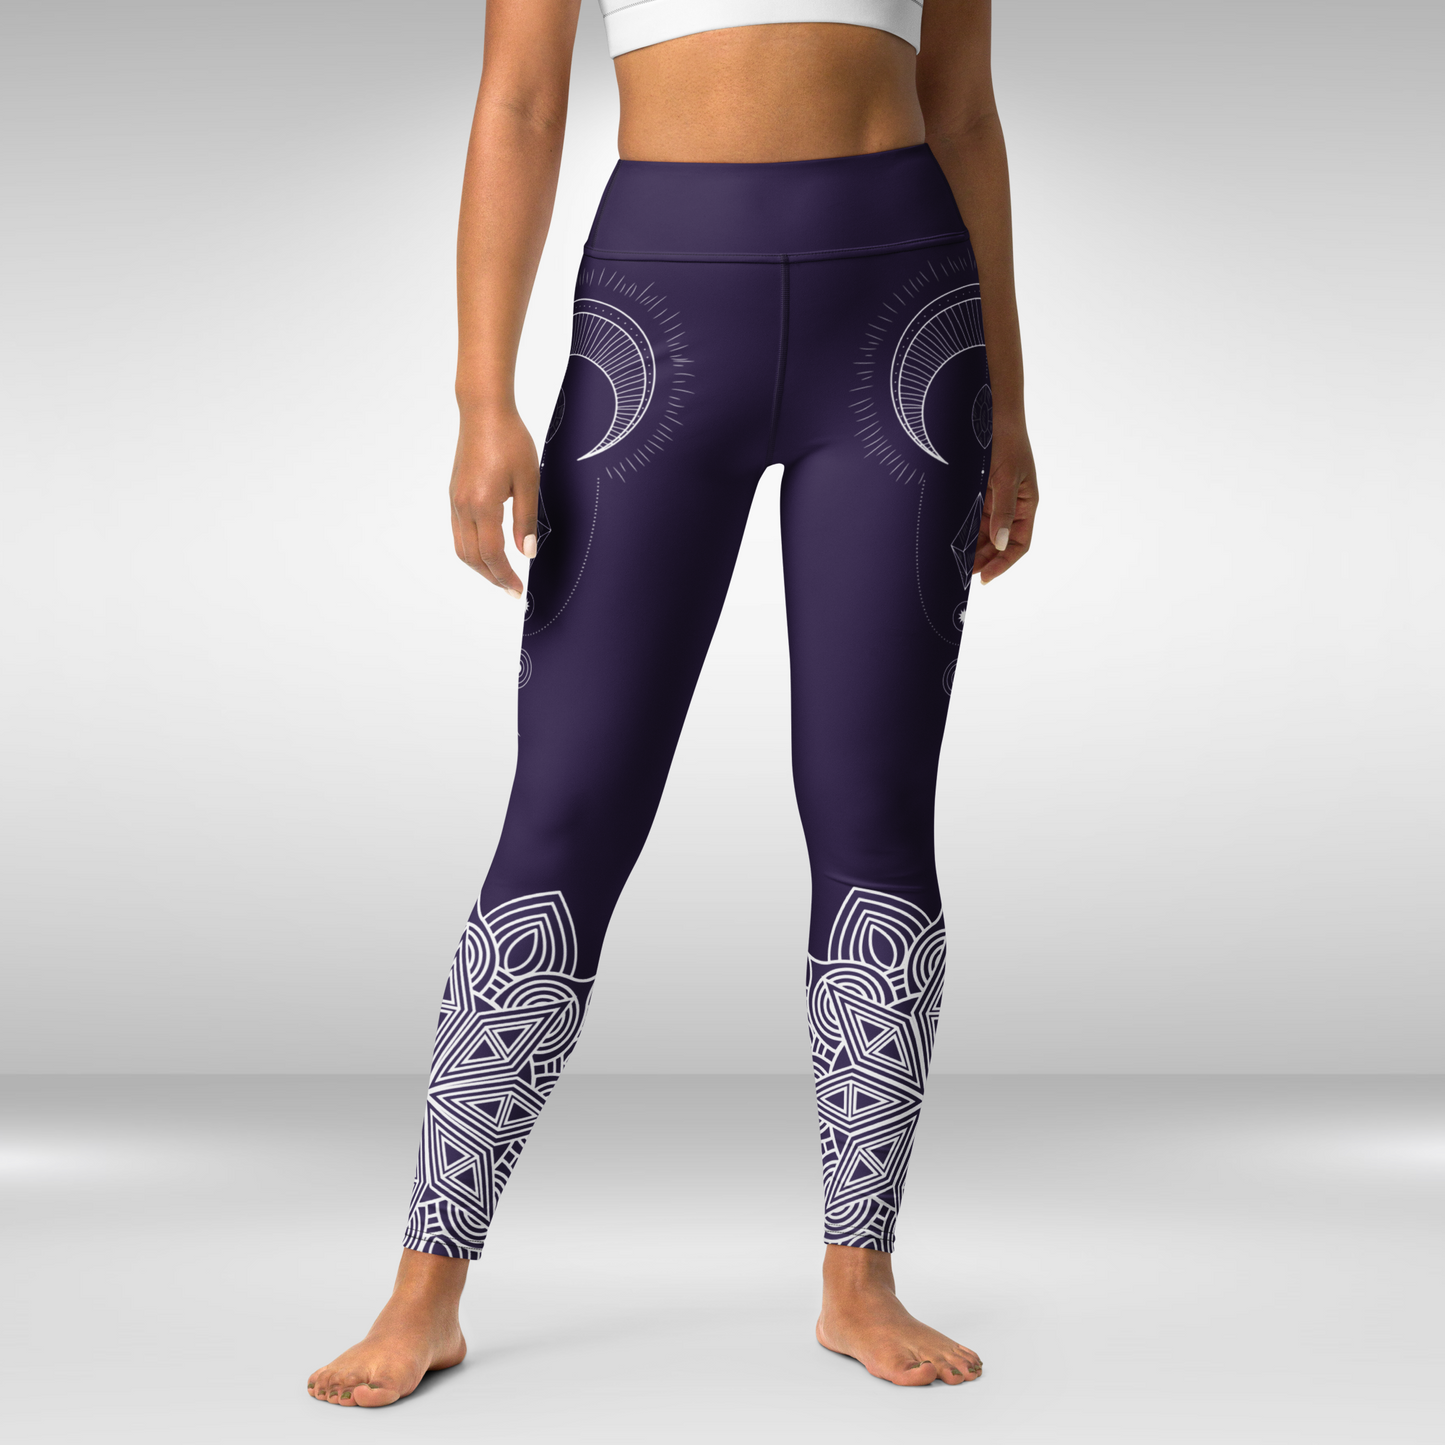 Women Yoga Legging - Purple and White Mandala Print